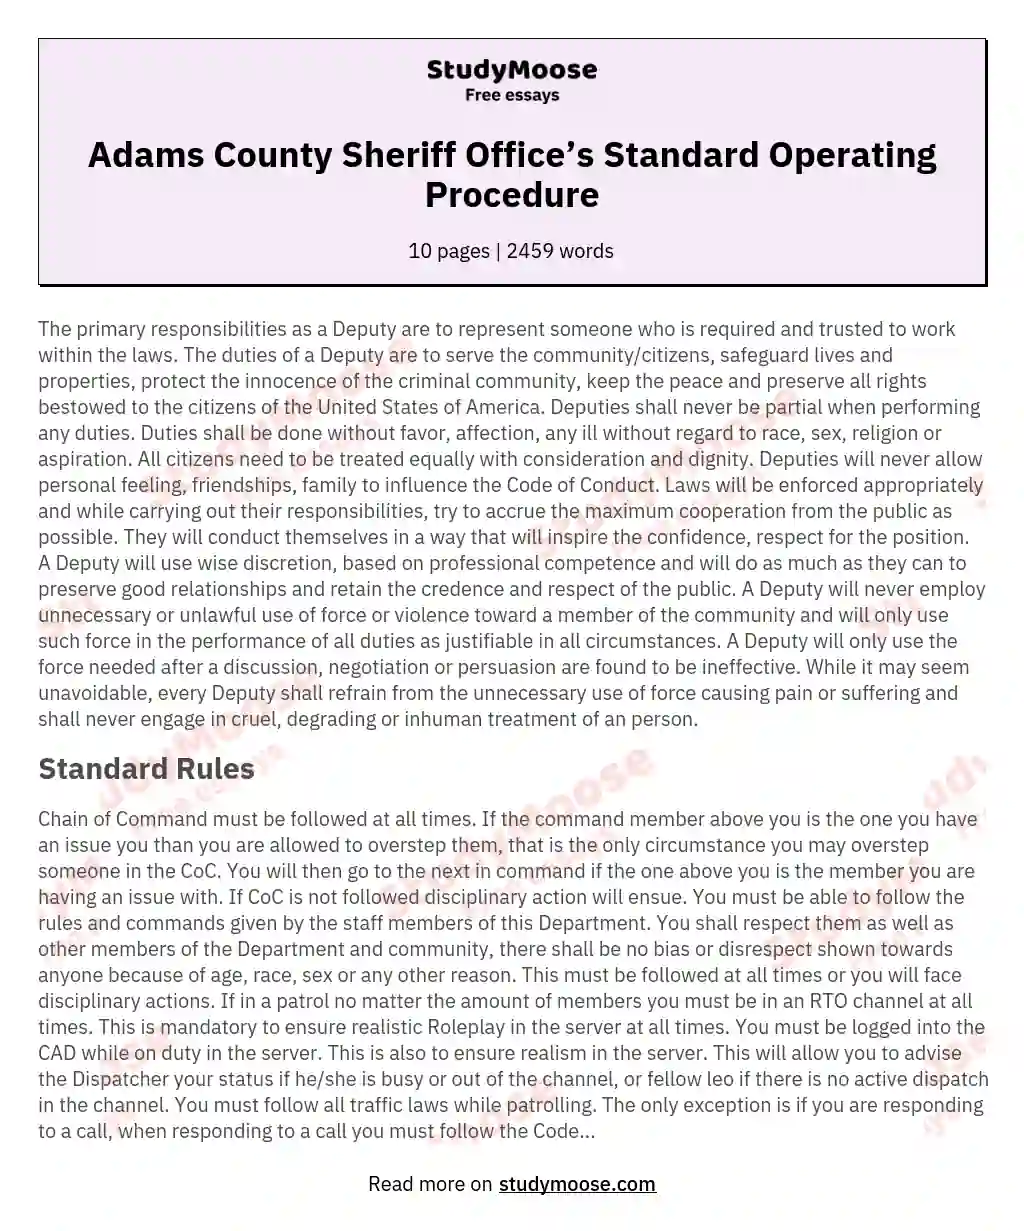 Adams County Sheriff Office’s Standard Operating Procedure